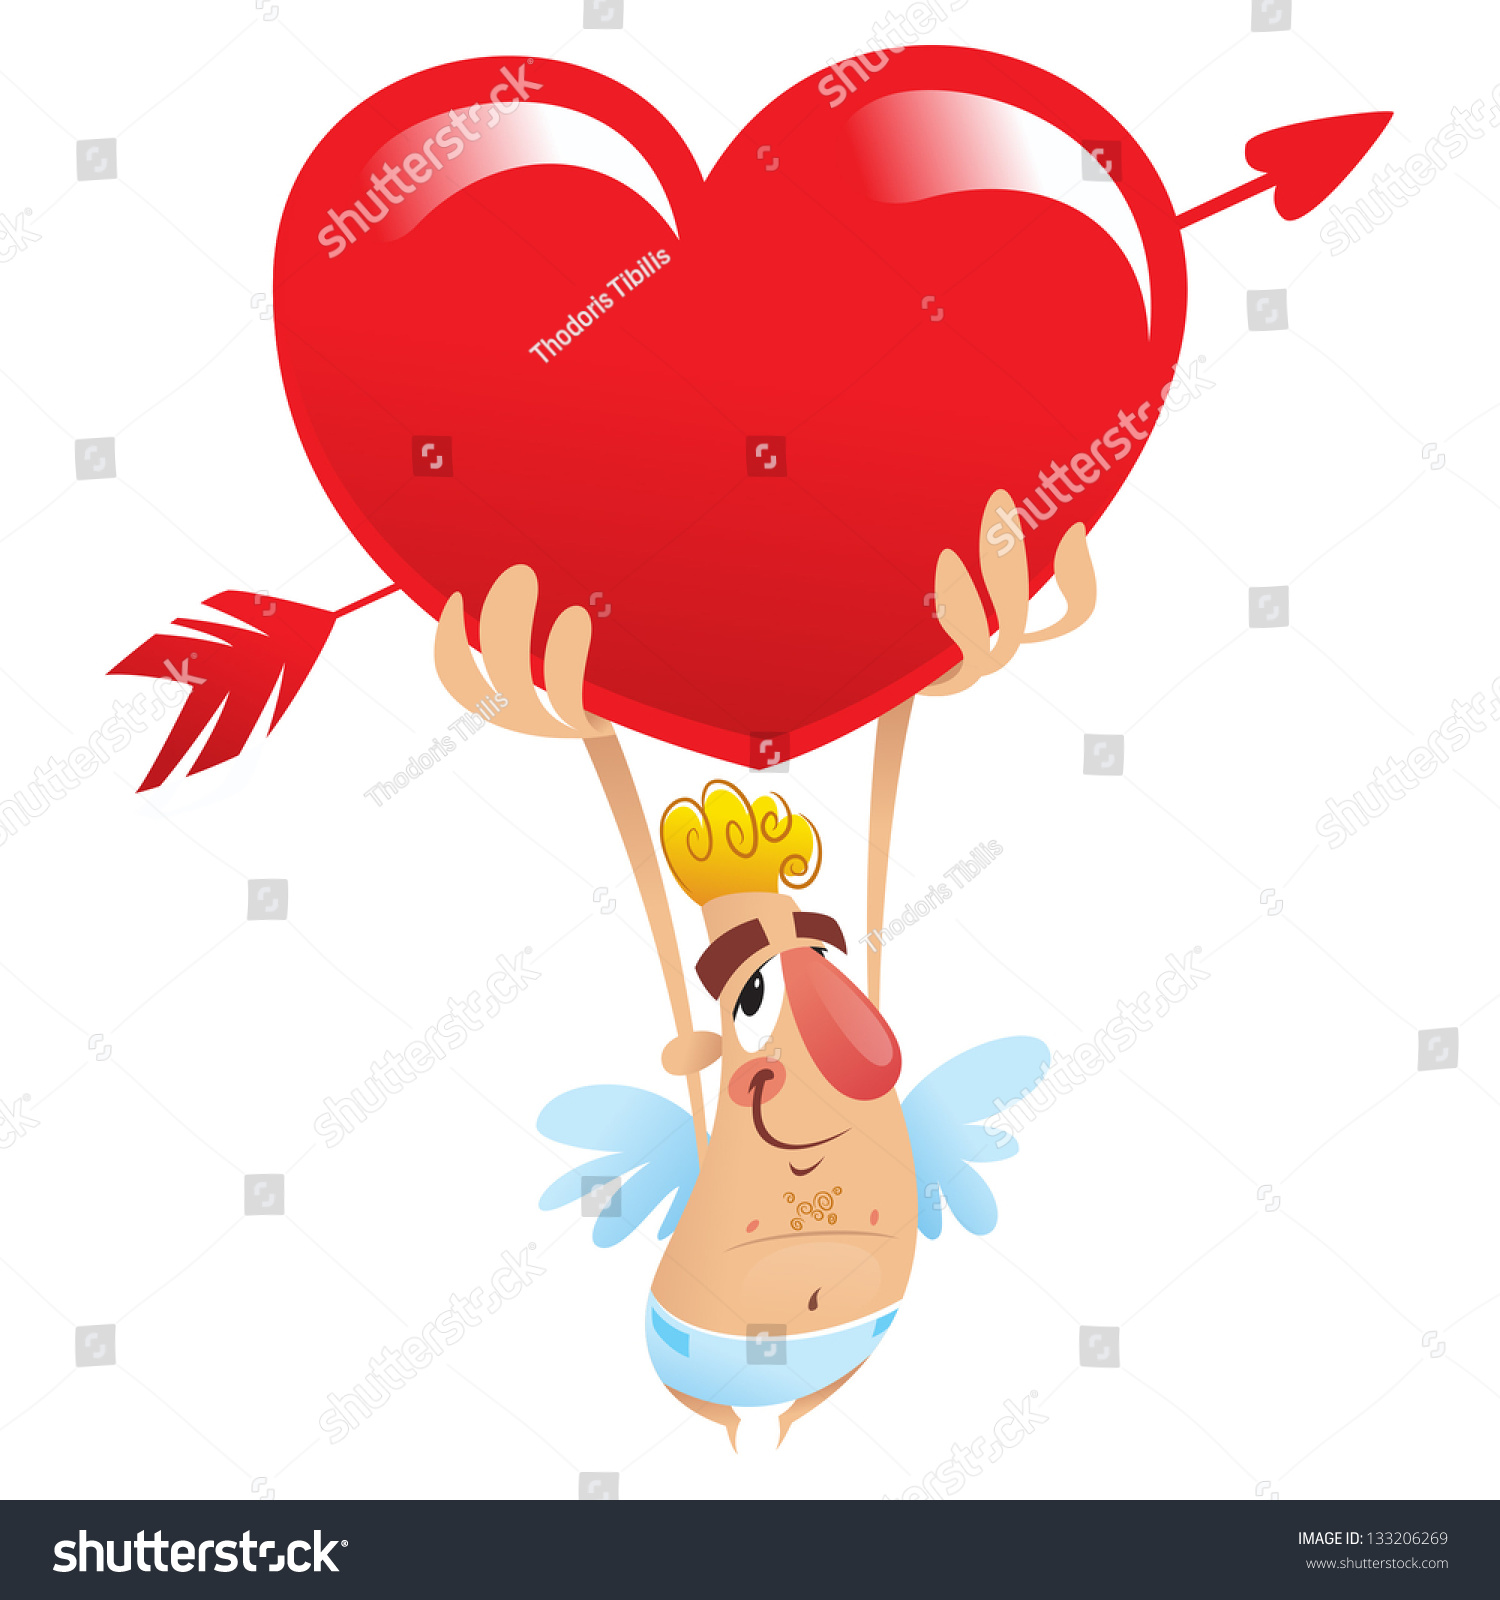 Cartoon Funny Cupid Holding Huge Heart Stock Vector 133206269 Shutterstock 9132